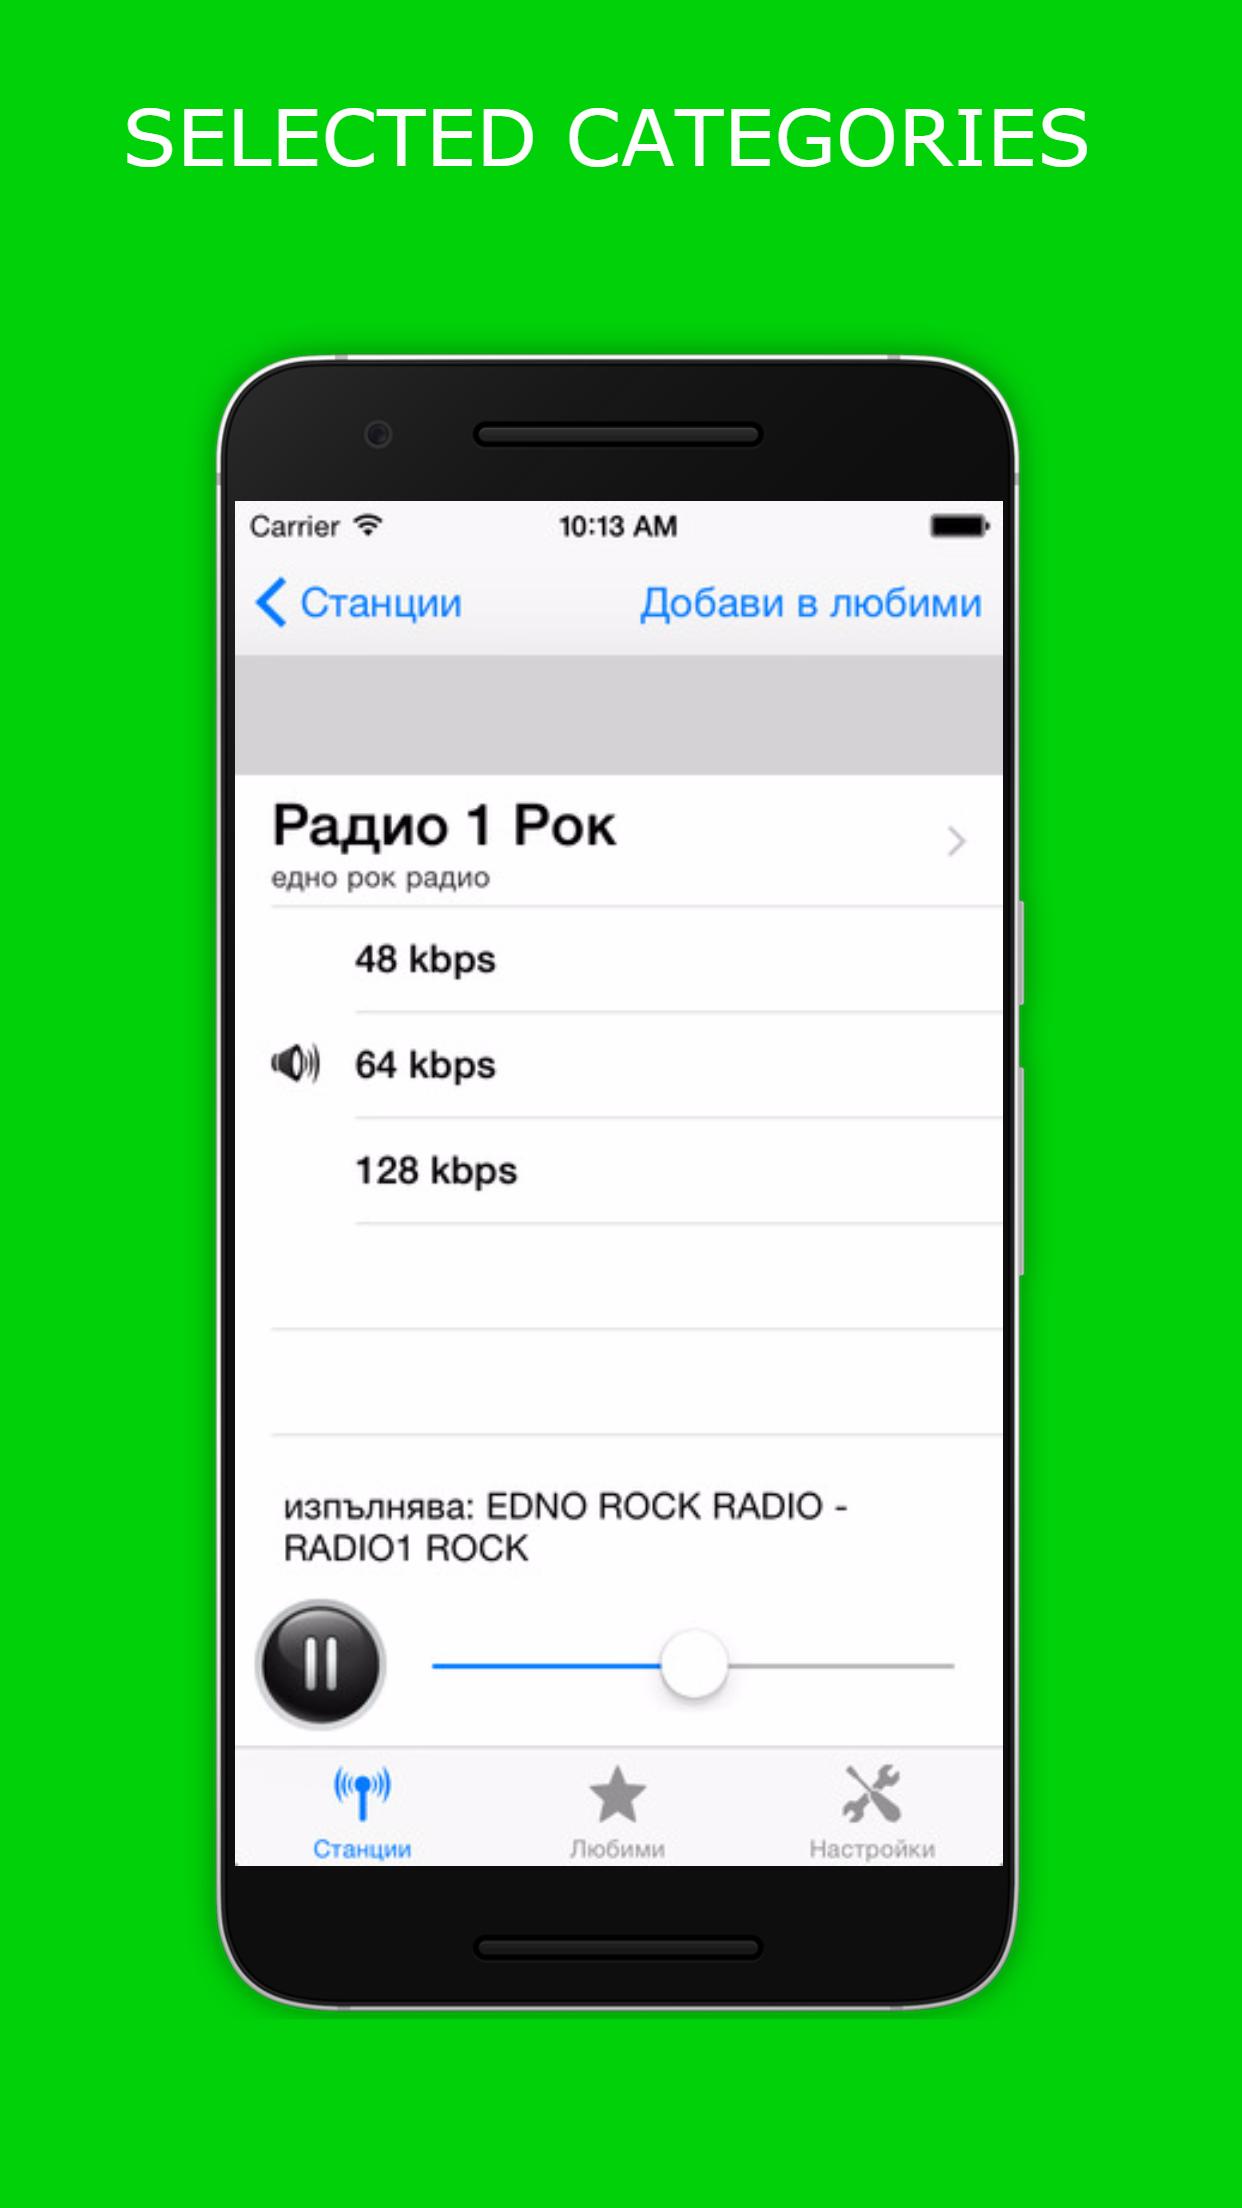 RADIO USA,ONLINE RADIO,FMRADIO for Android - APK Download